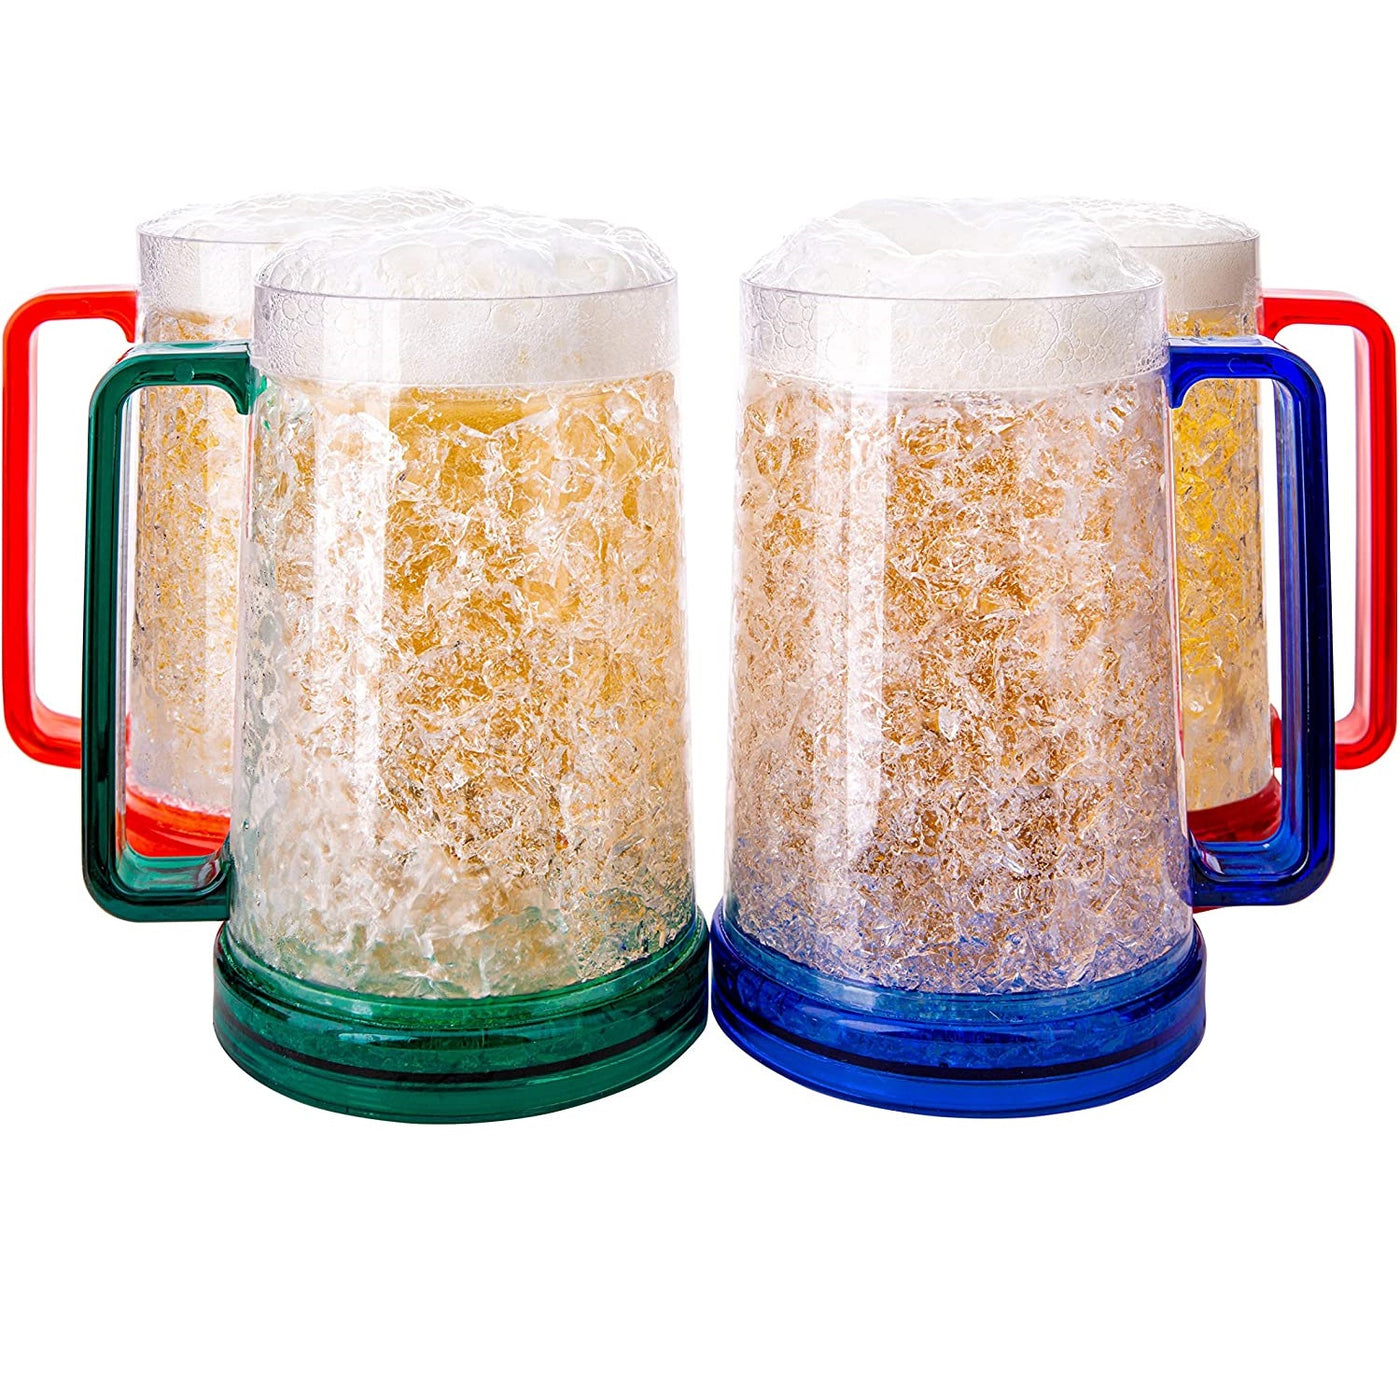 Granatan Beer Mugs for Freezer - Frosted Beer Mugs - Beer Mug - Double Walled Freezer Mugs with Gel - Freezer Beer Mug - Frosty Mug - Beer Glasses for